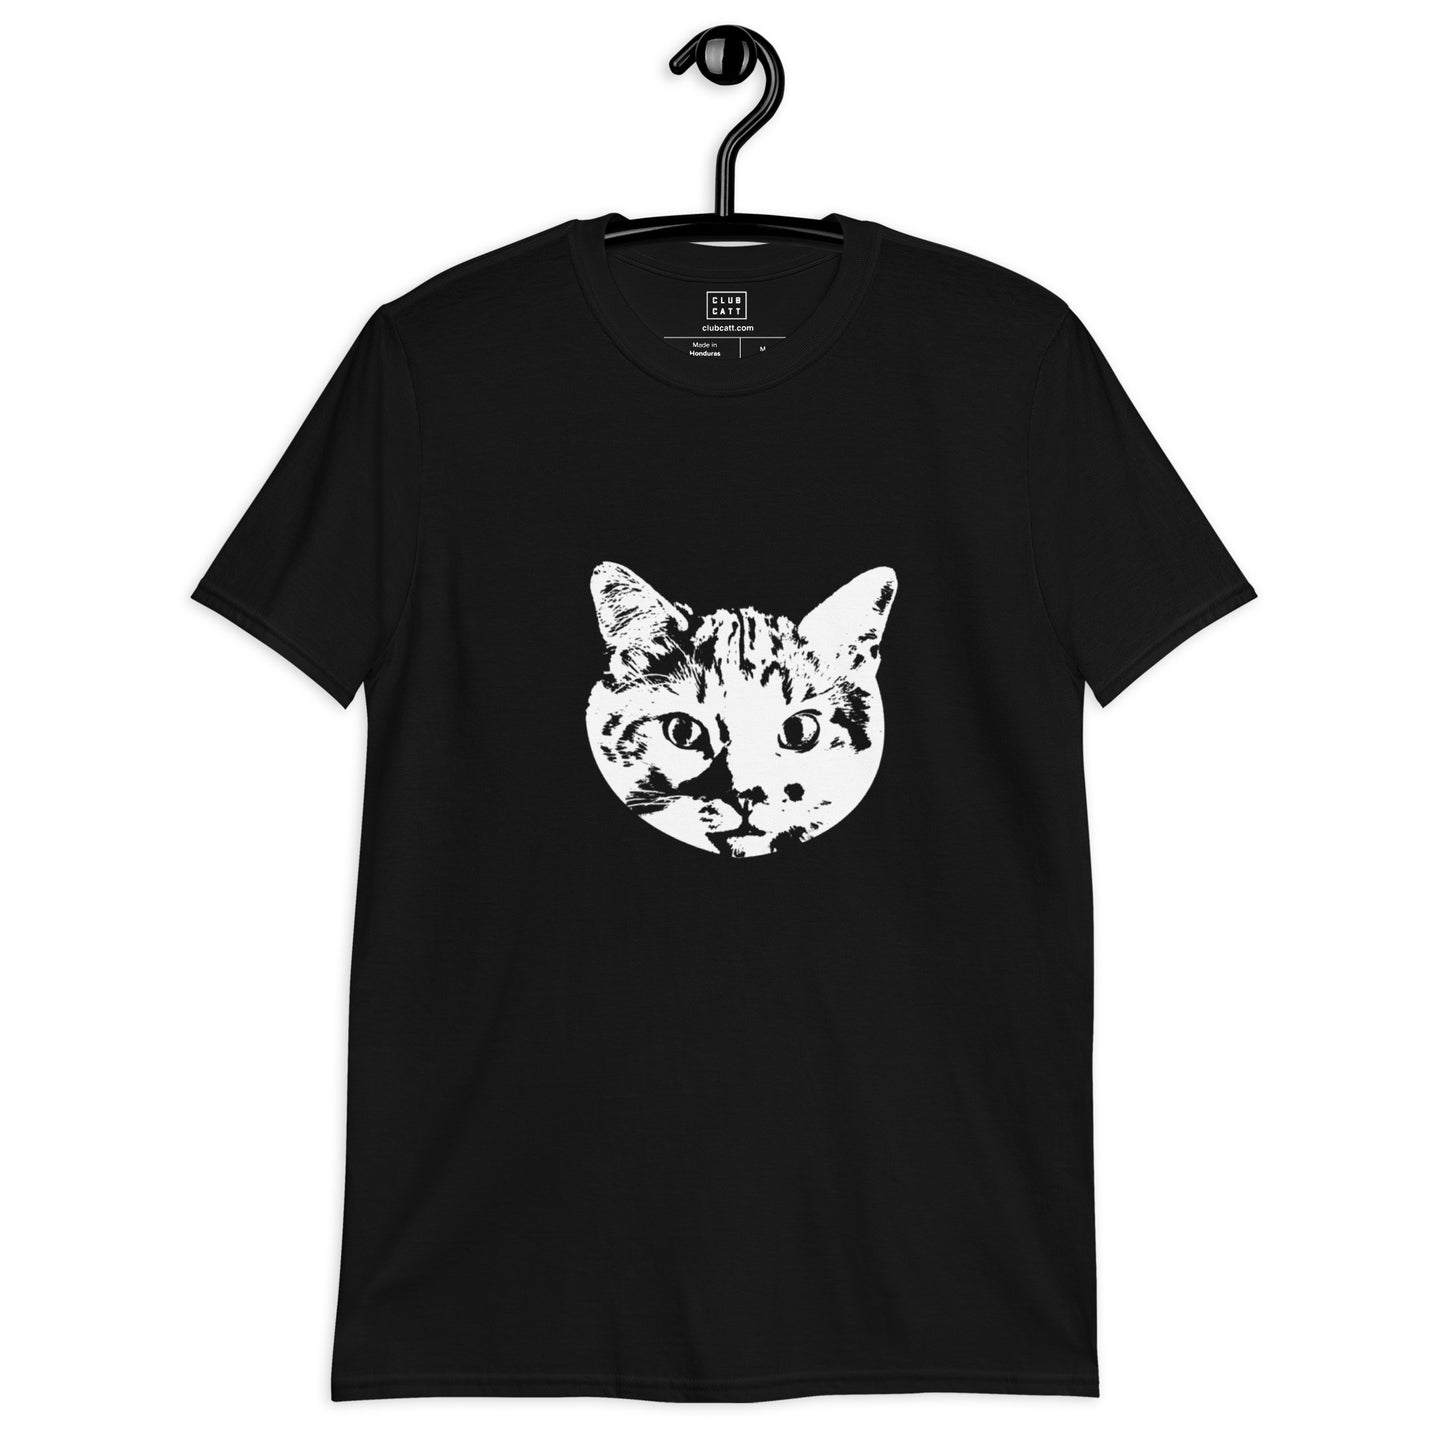 MOMO Cat on T-Shirt